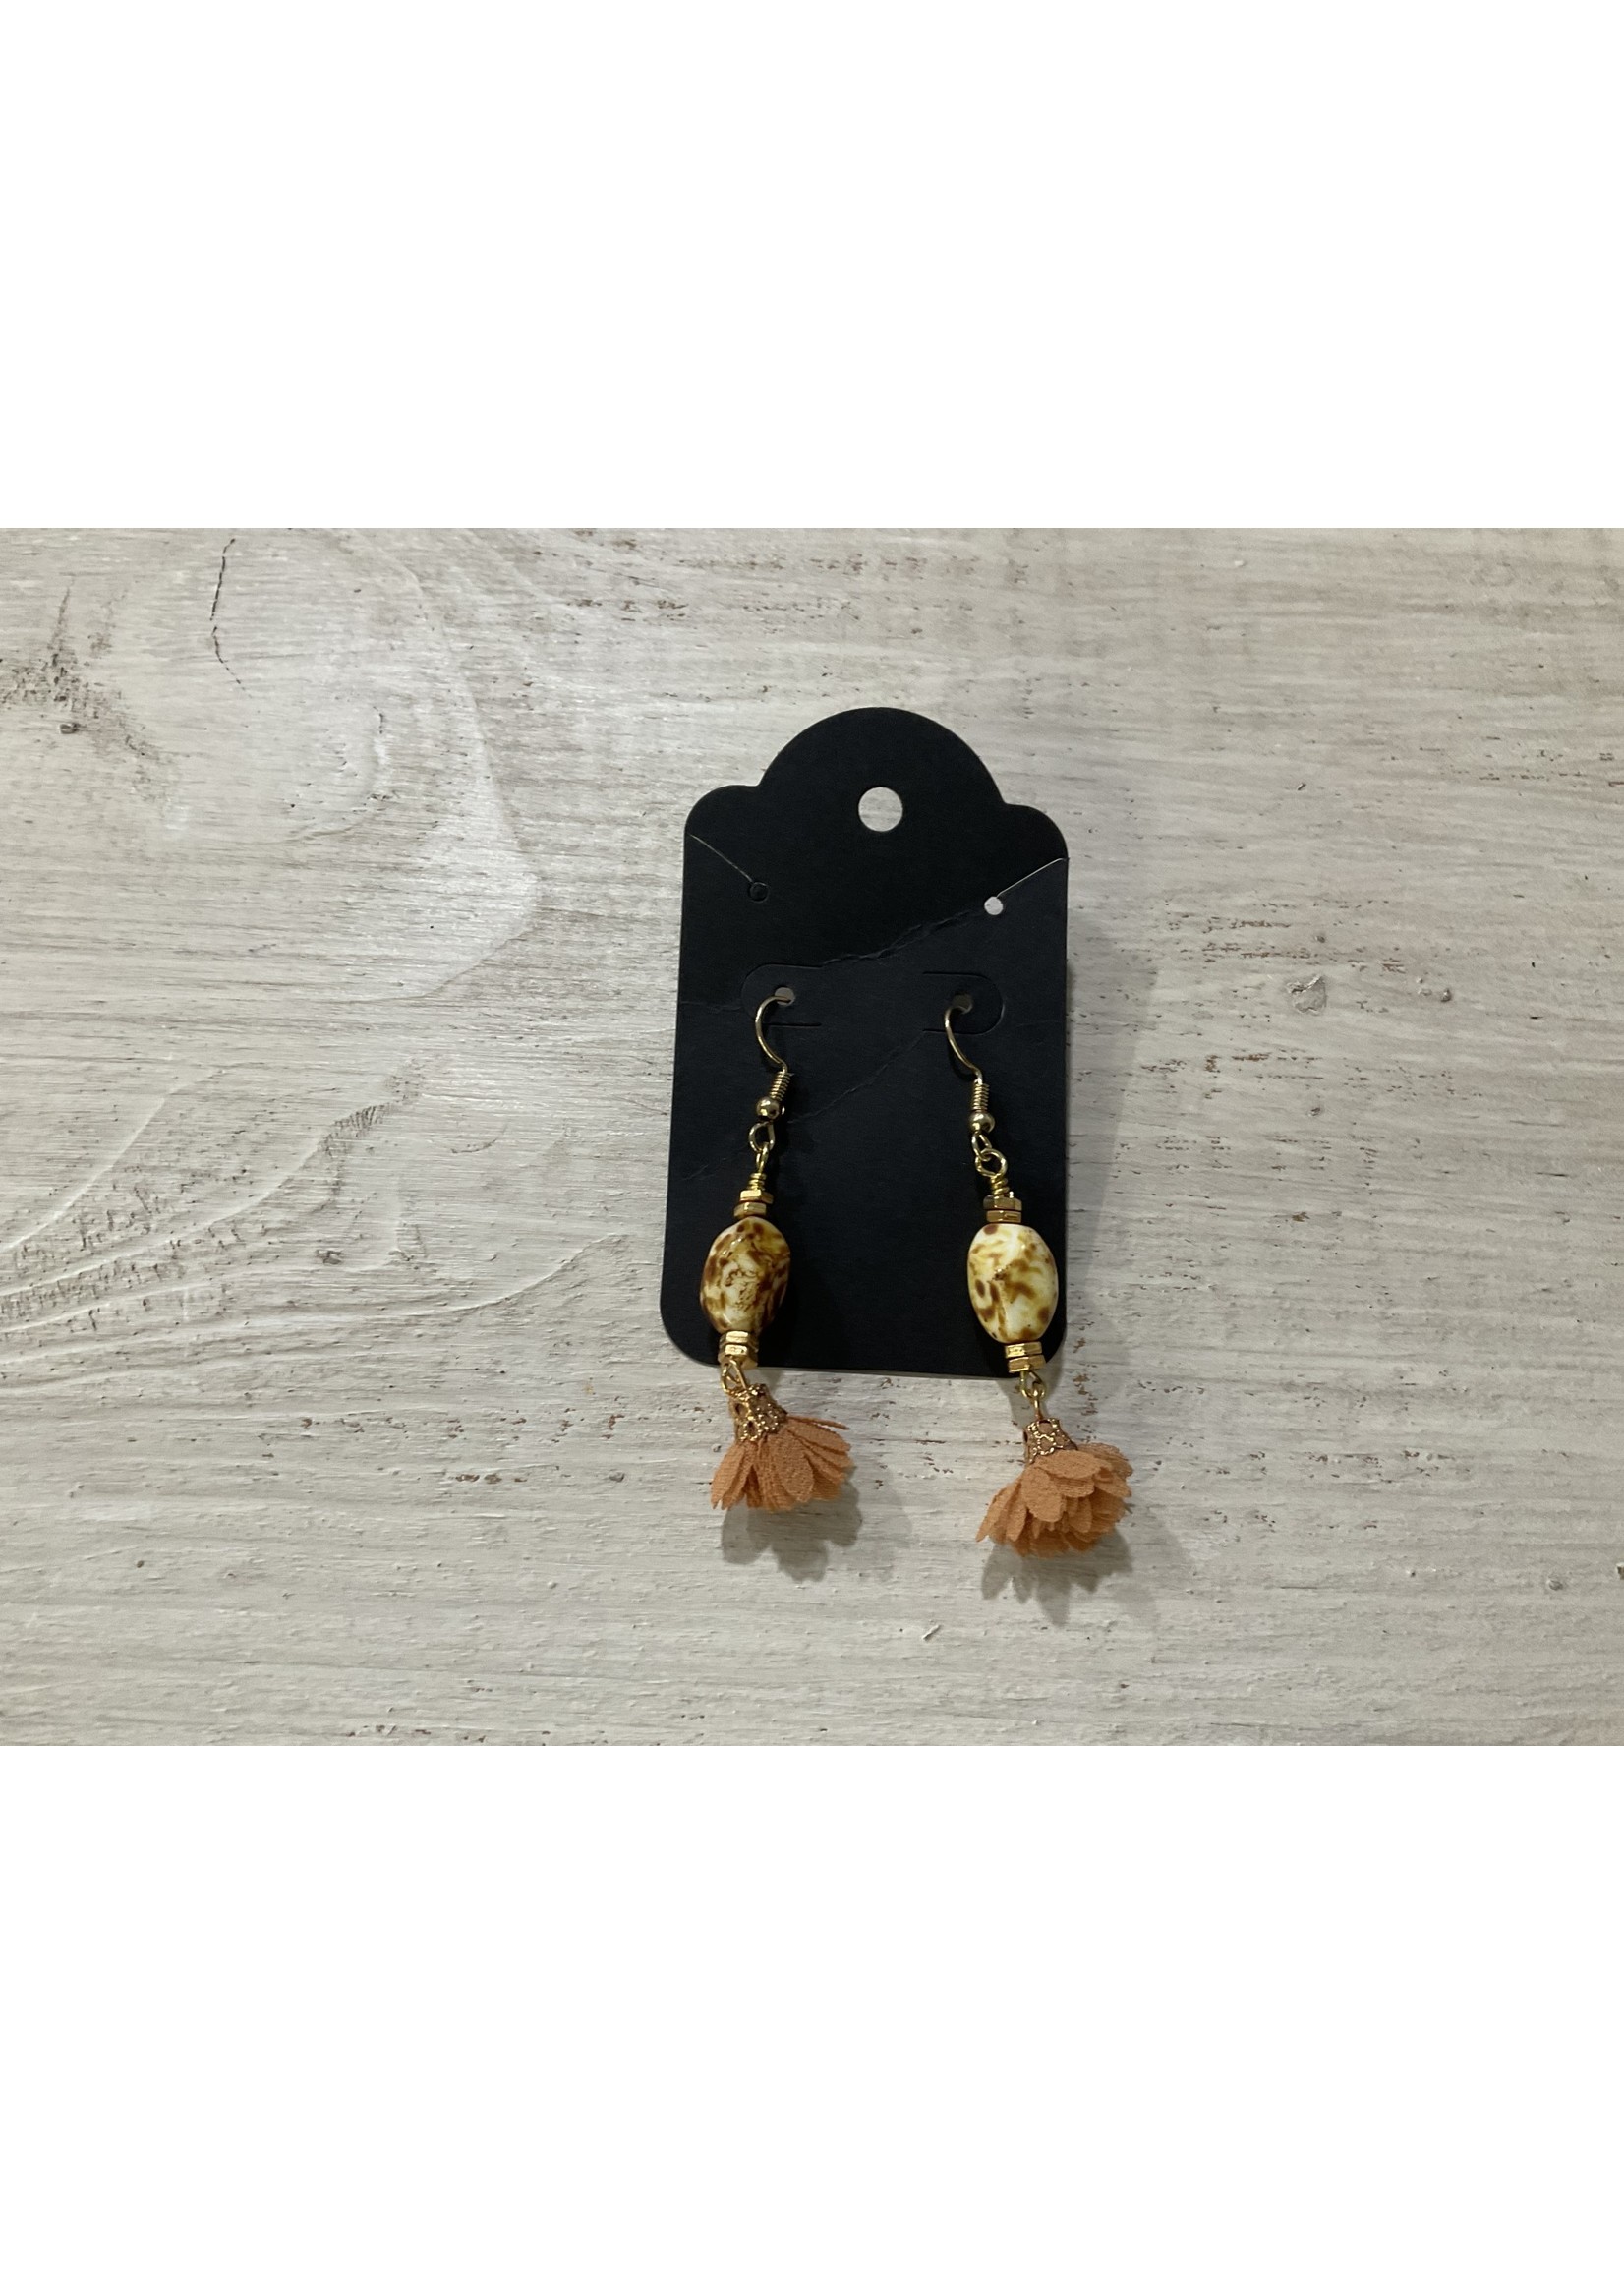 Our Twisted Dahlia E214 Tan & Gold Earrings